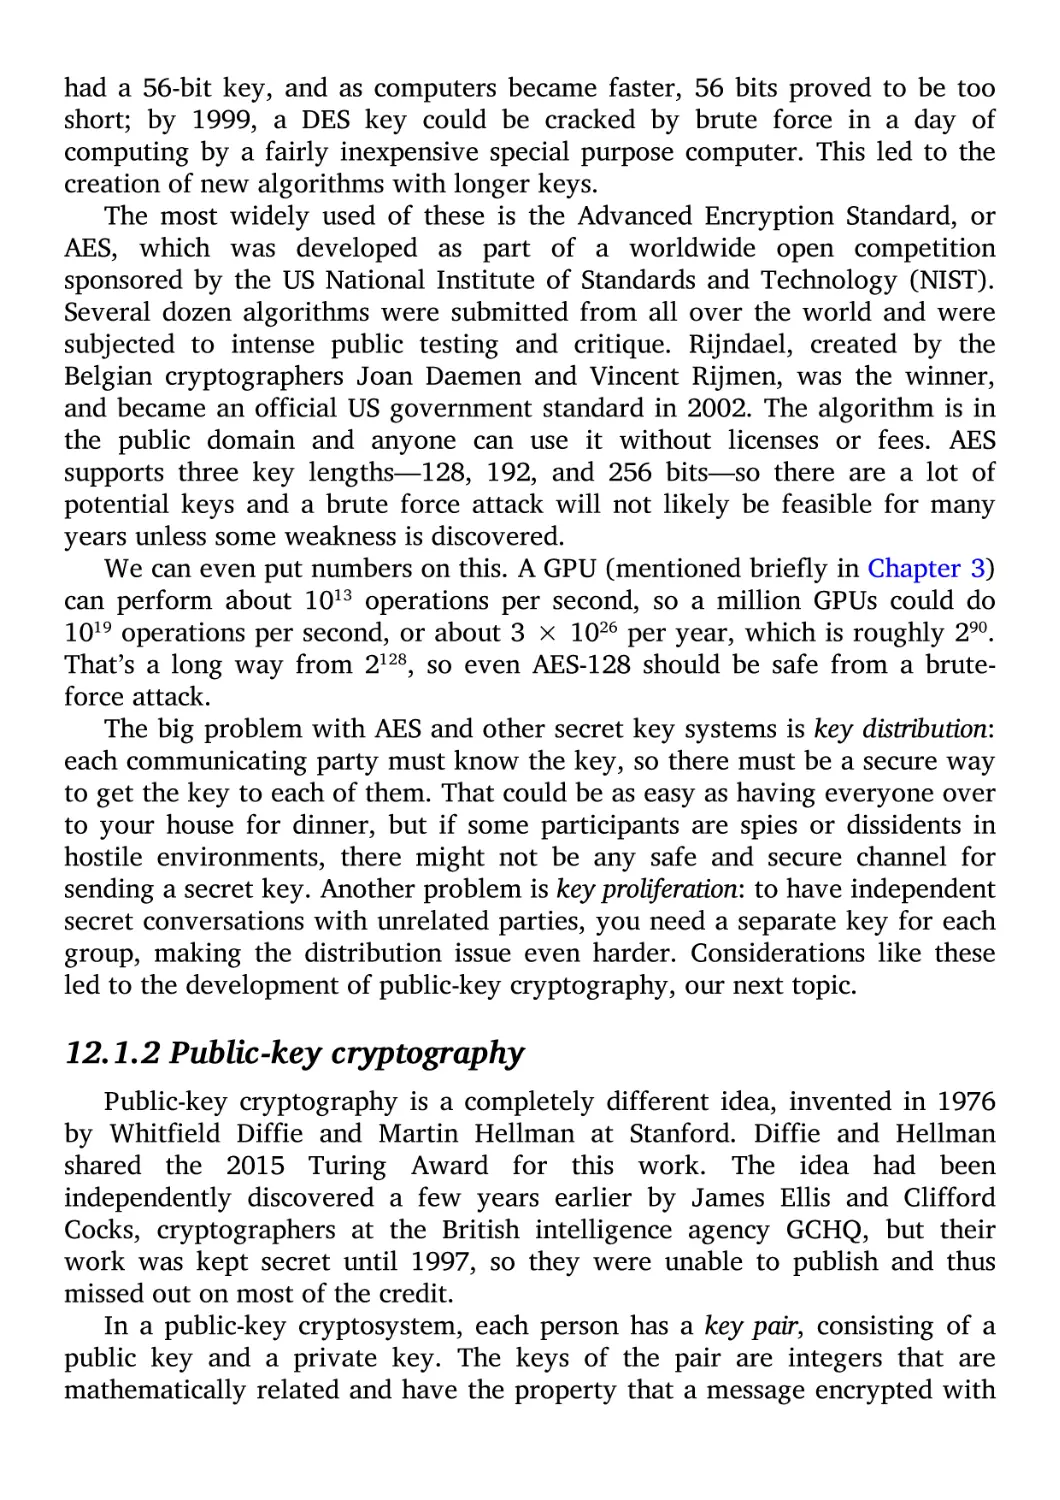 12.1.2 Public-key cryptography